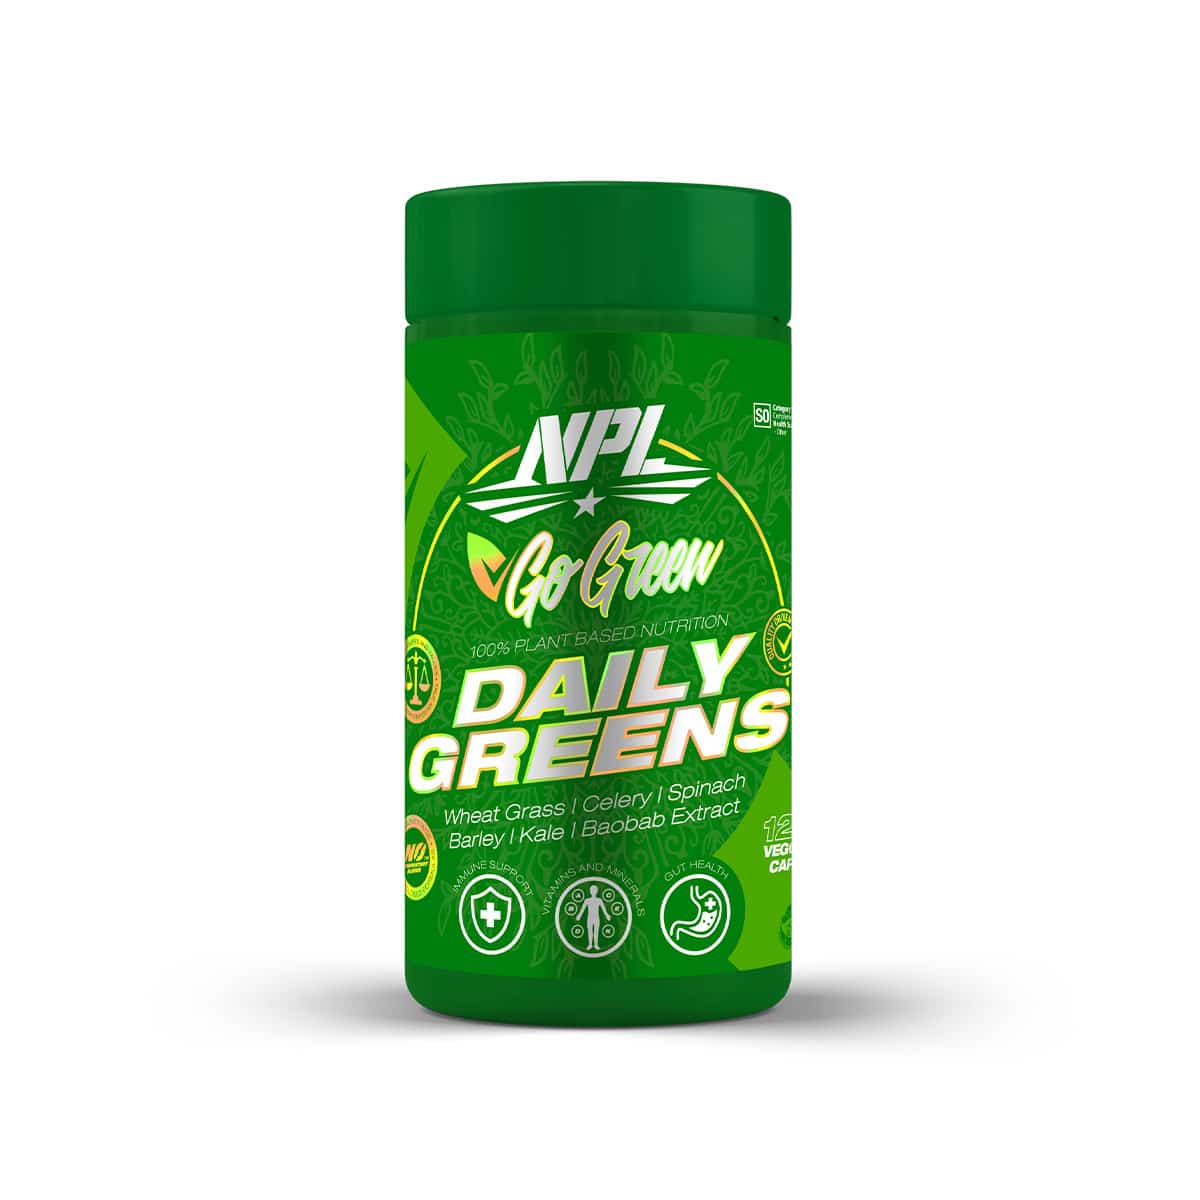 NPL Daily Greens - 120's